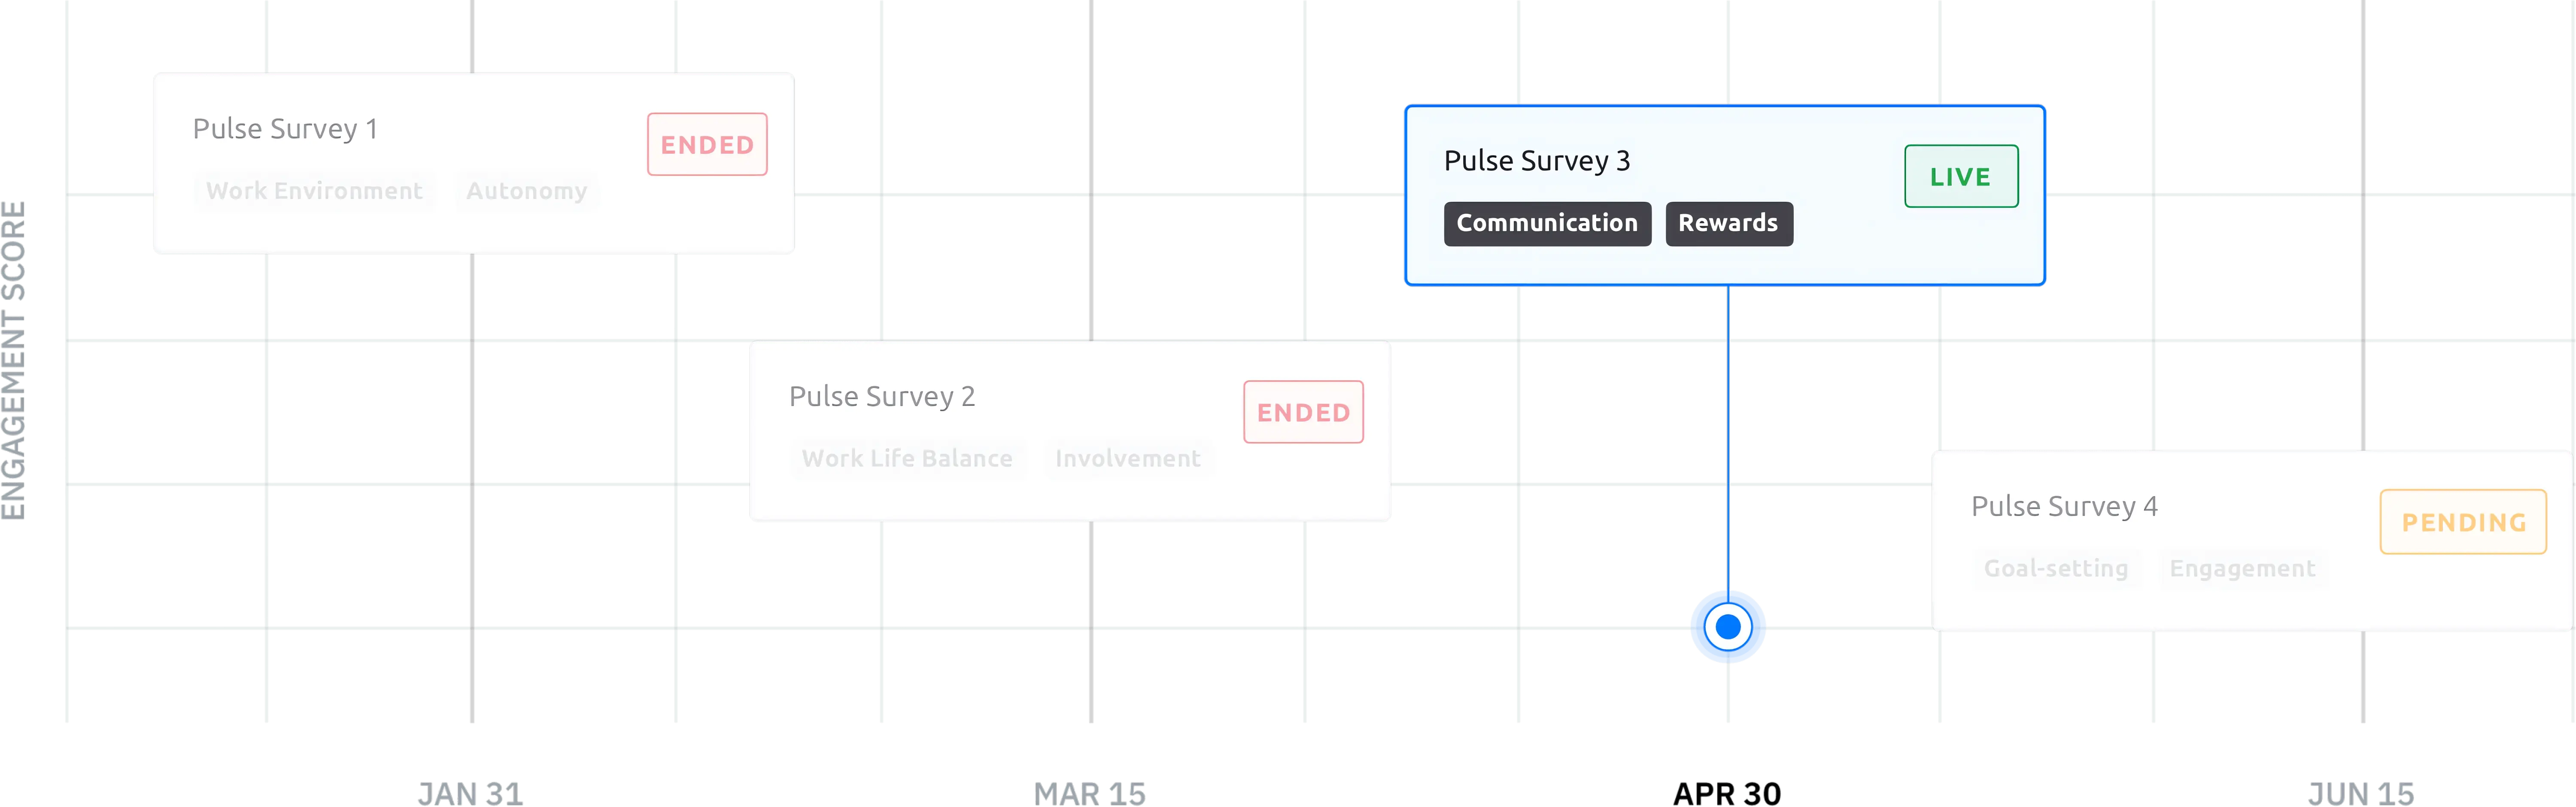 Employee pulse survey tool